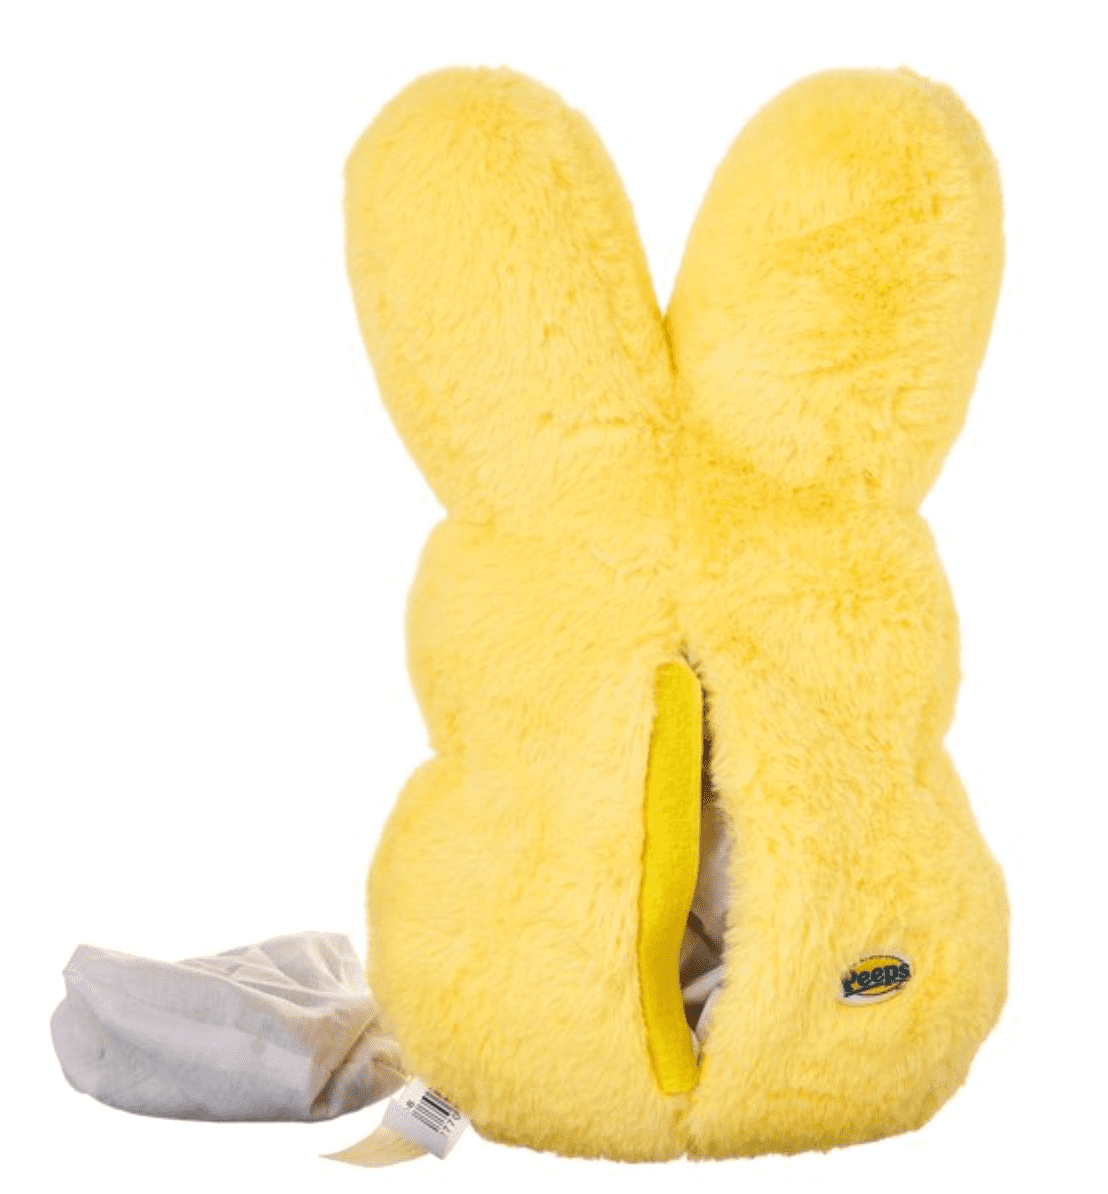 Peeps Easter Peep Bunny Heatable Yellow Plush New with Tag 